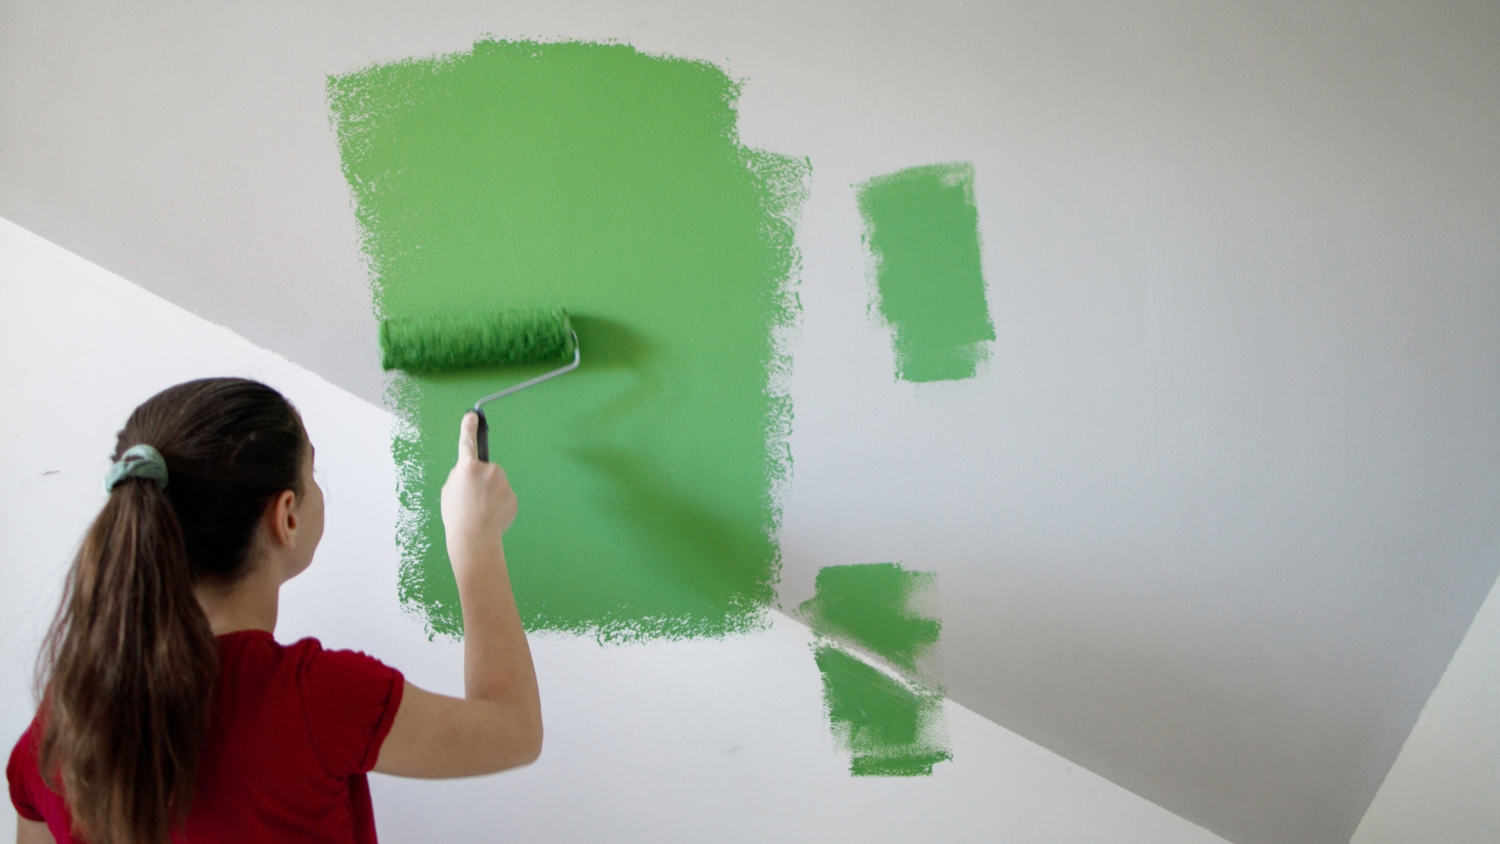 devojica farba zid sobe u zelenu boju